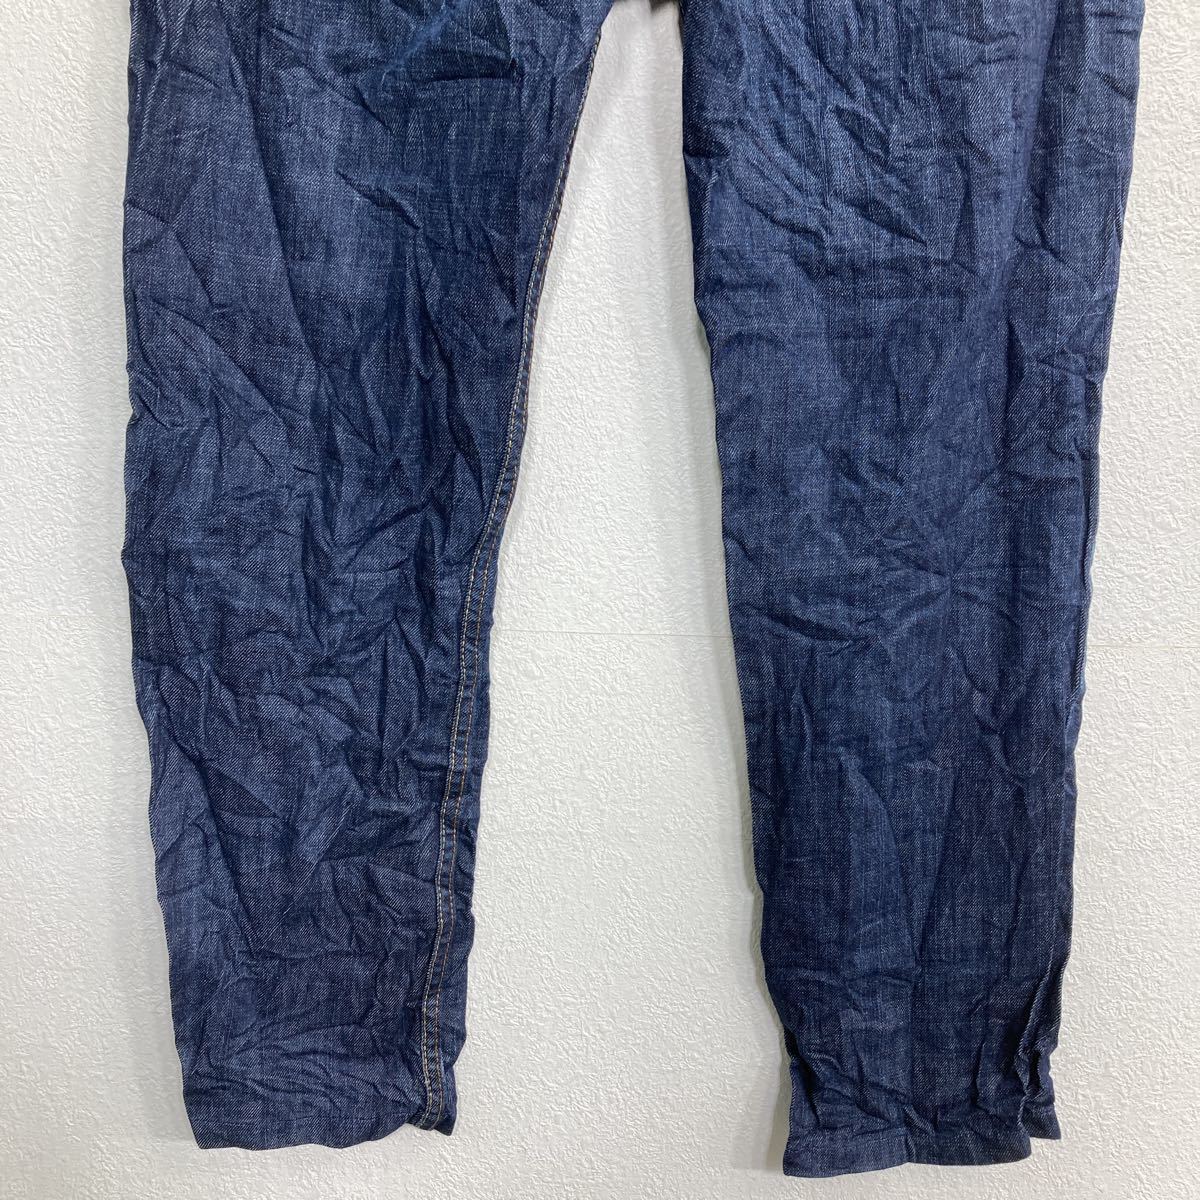 157 Denim pants W36 new classic big size indigo old clothes . America buying up 2303-729